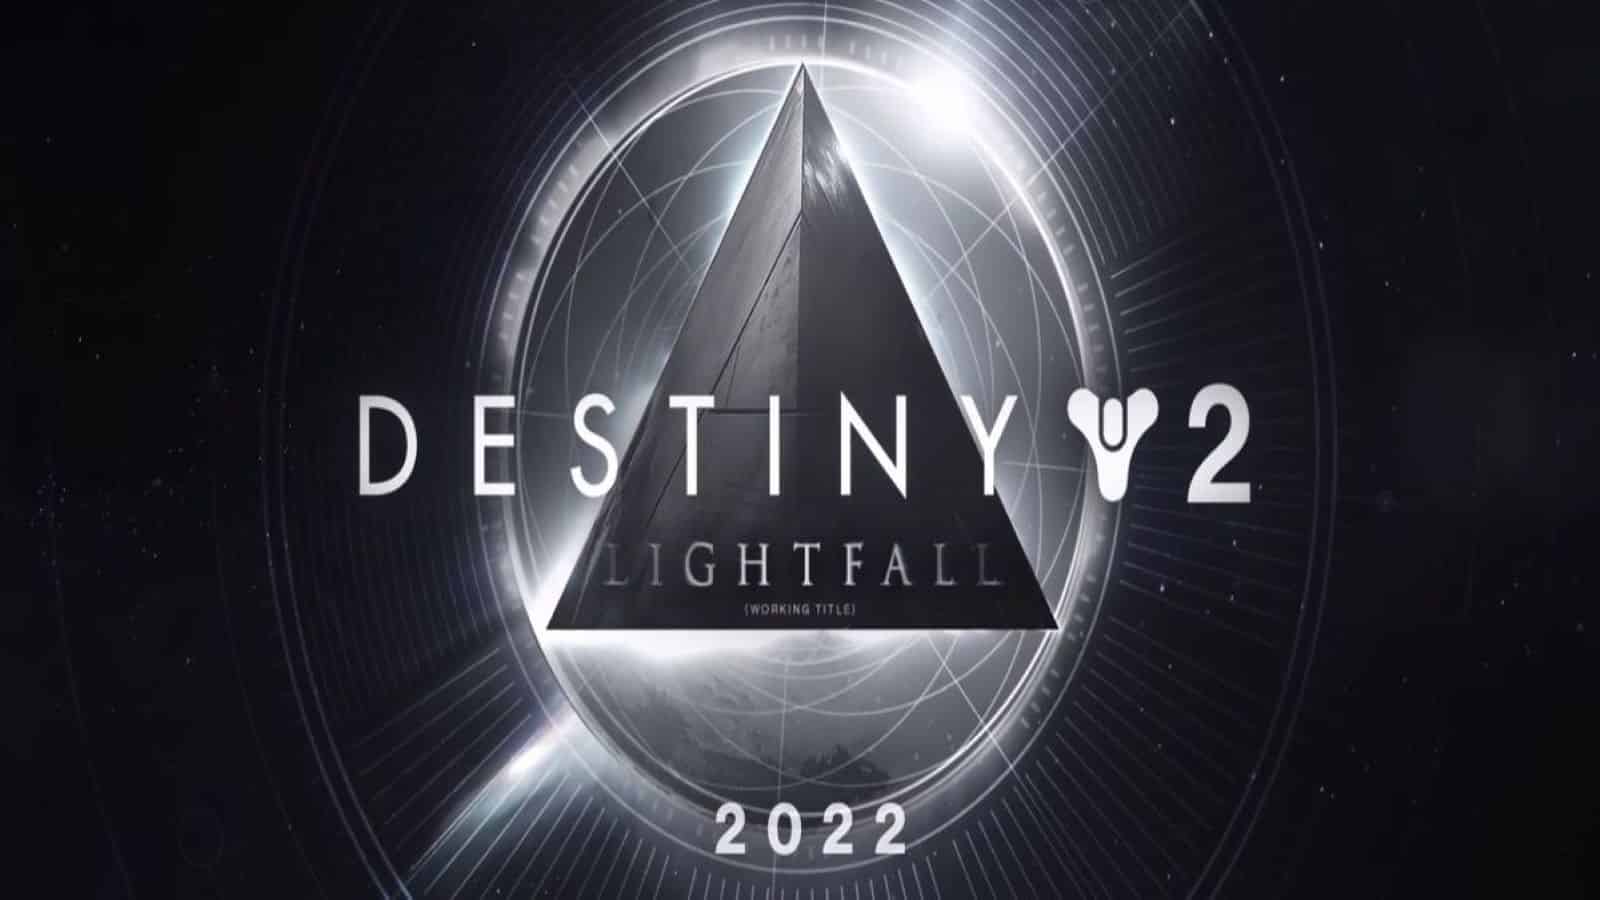 Future 2 Lightfall growth: Trailer, story, leaks